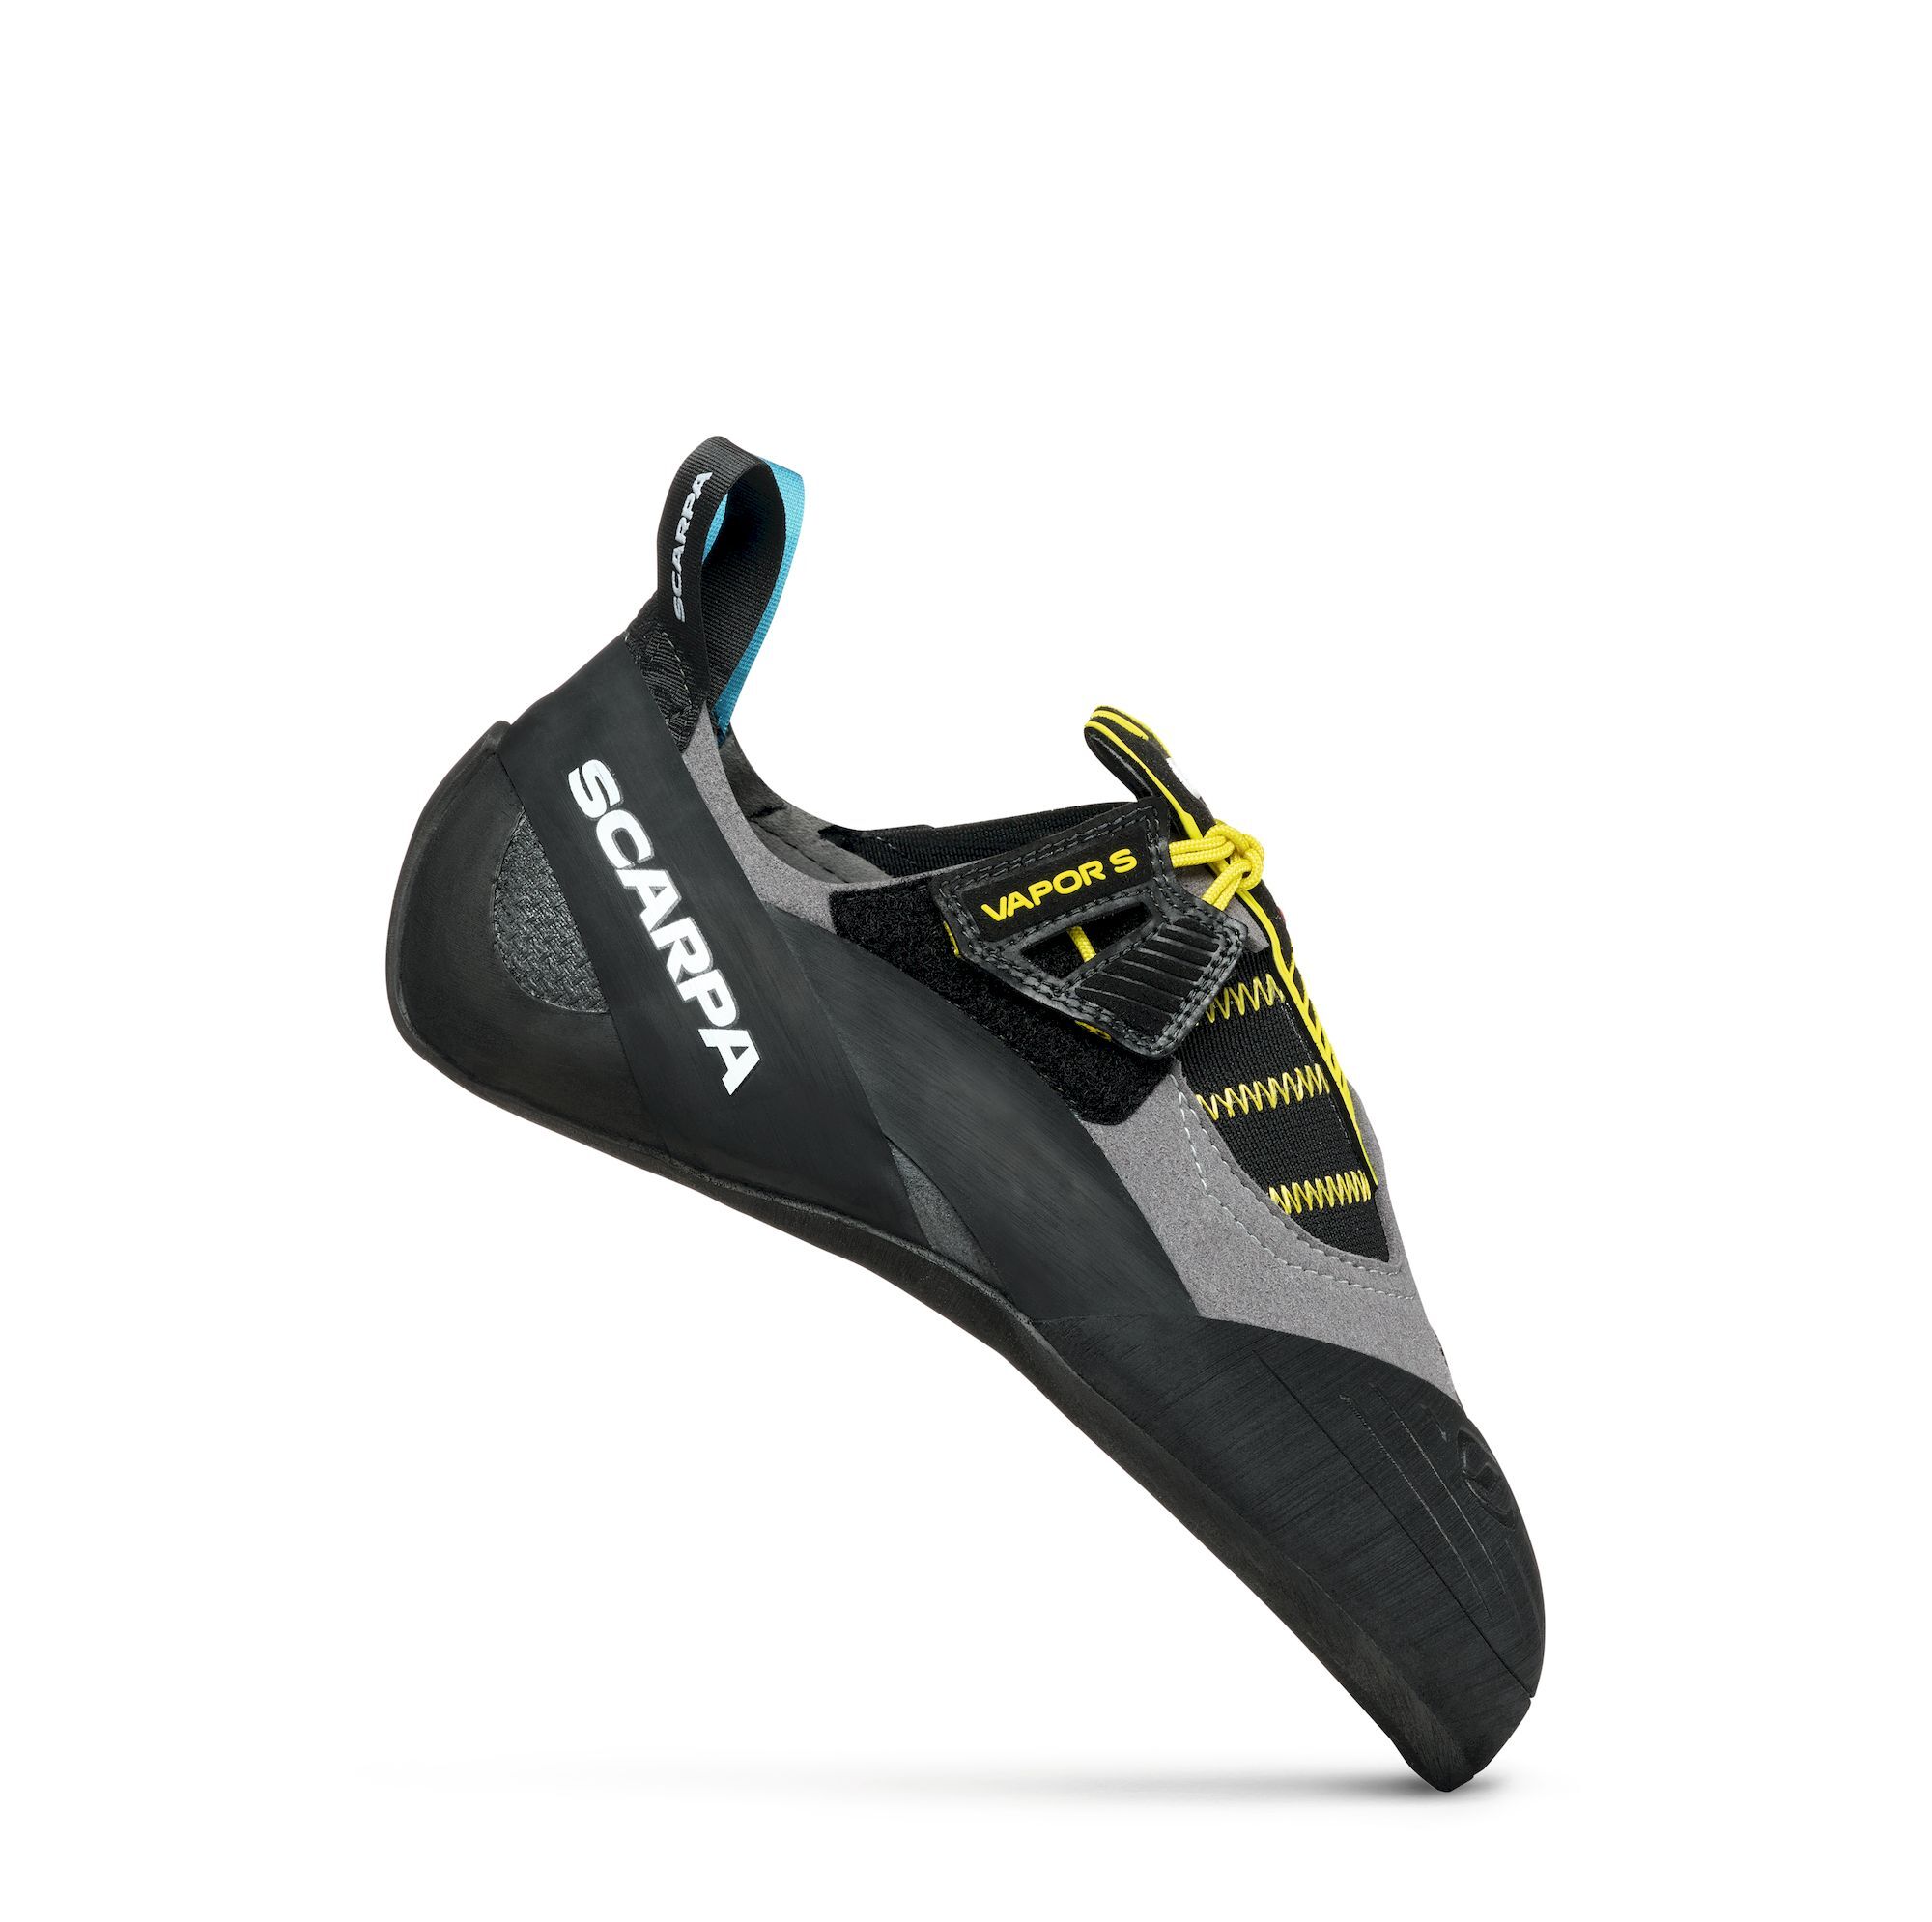 Scarpa Vapor S - Climbing shoes - Men's | Hardloop